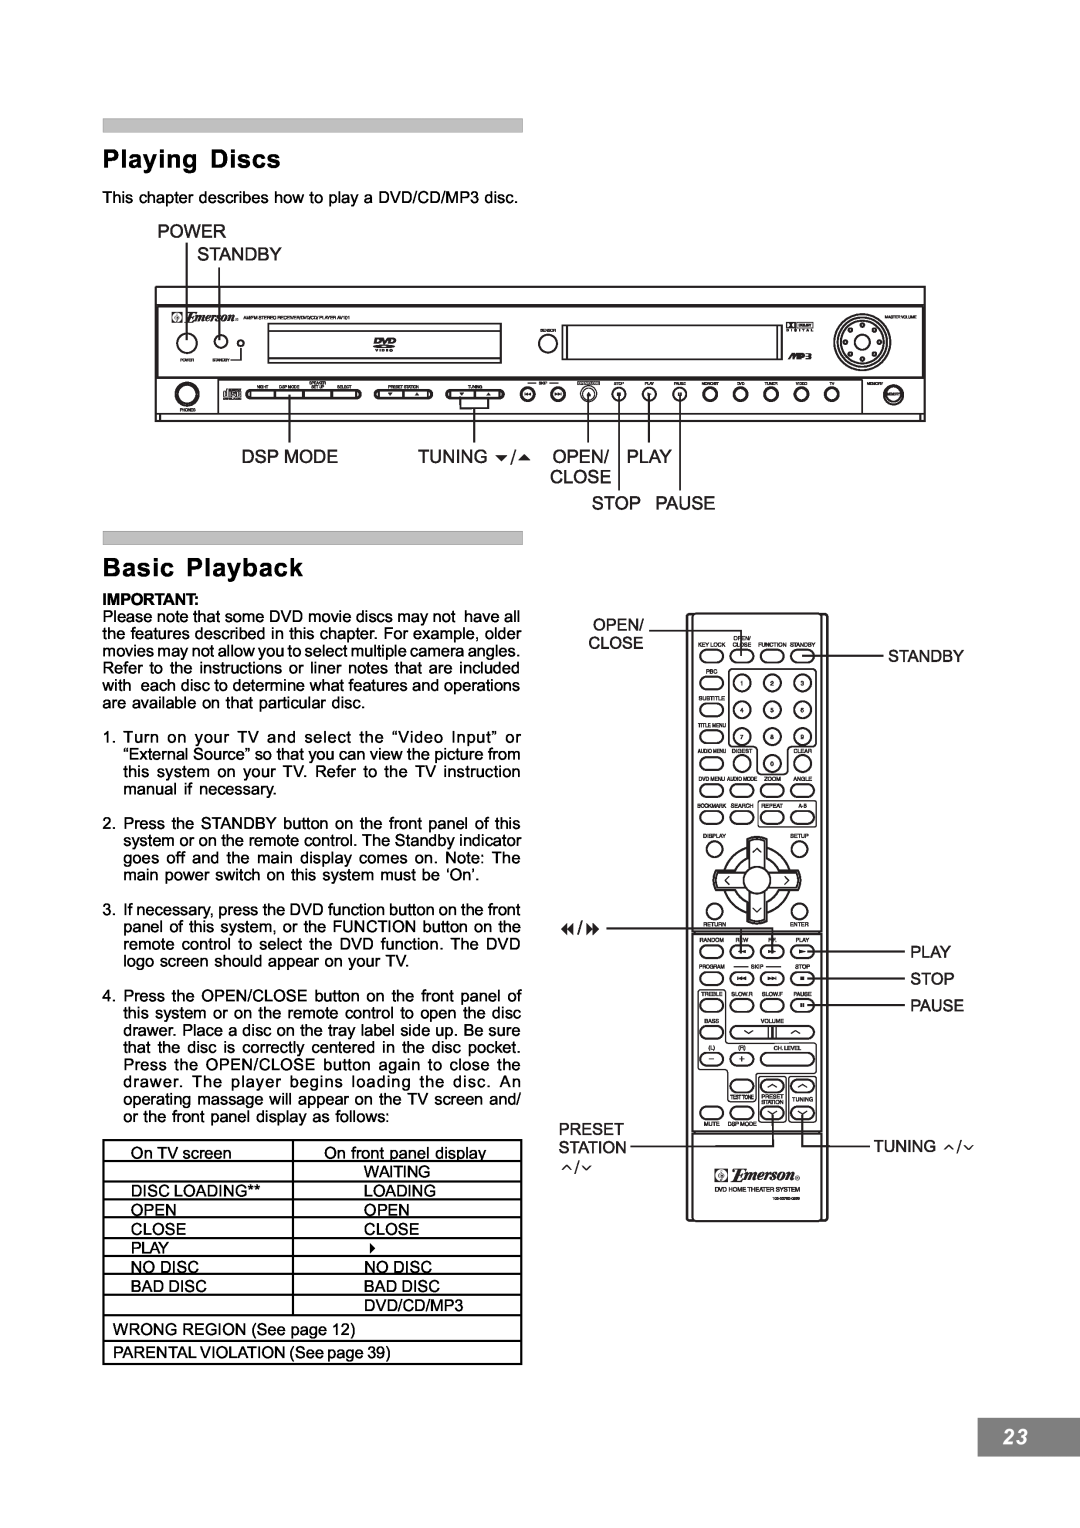 Emerson AV101 manual Playing Discs, Basic Playback 